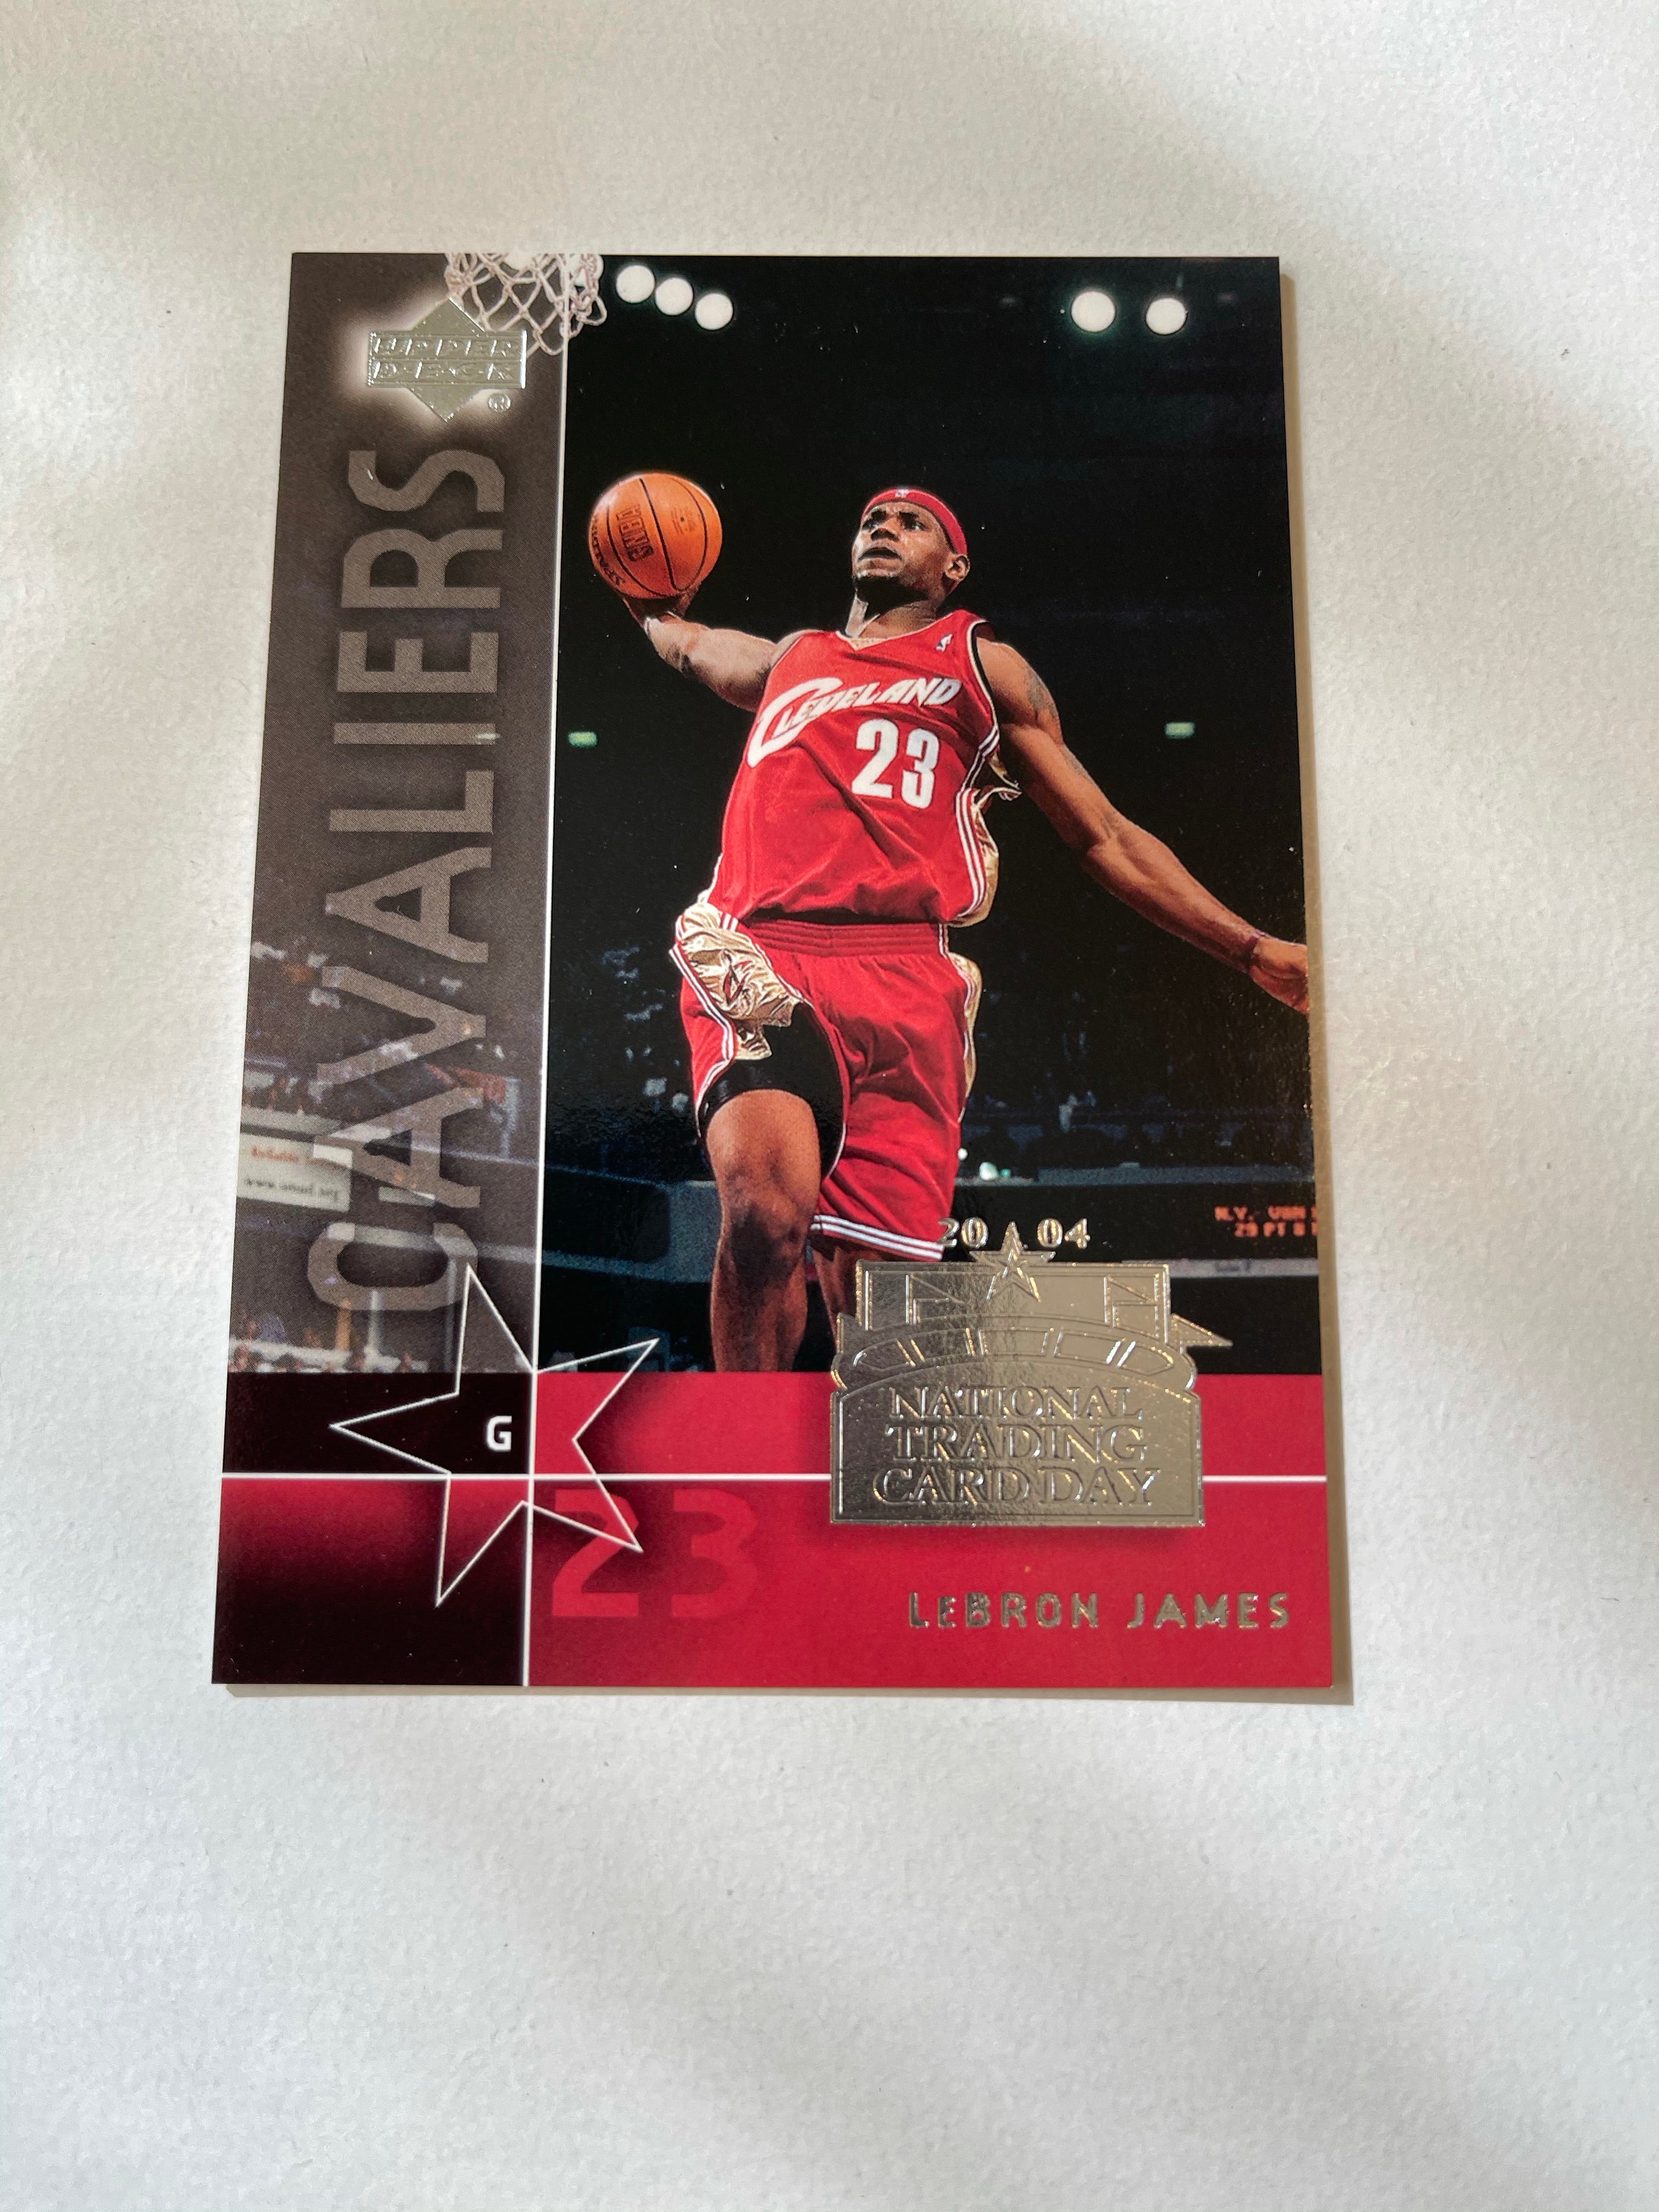 2004 LeBron James rookie National card day rare basketball card